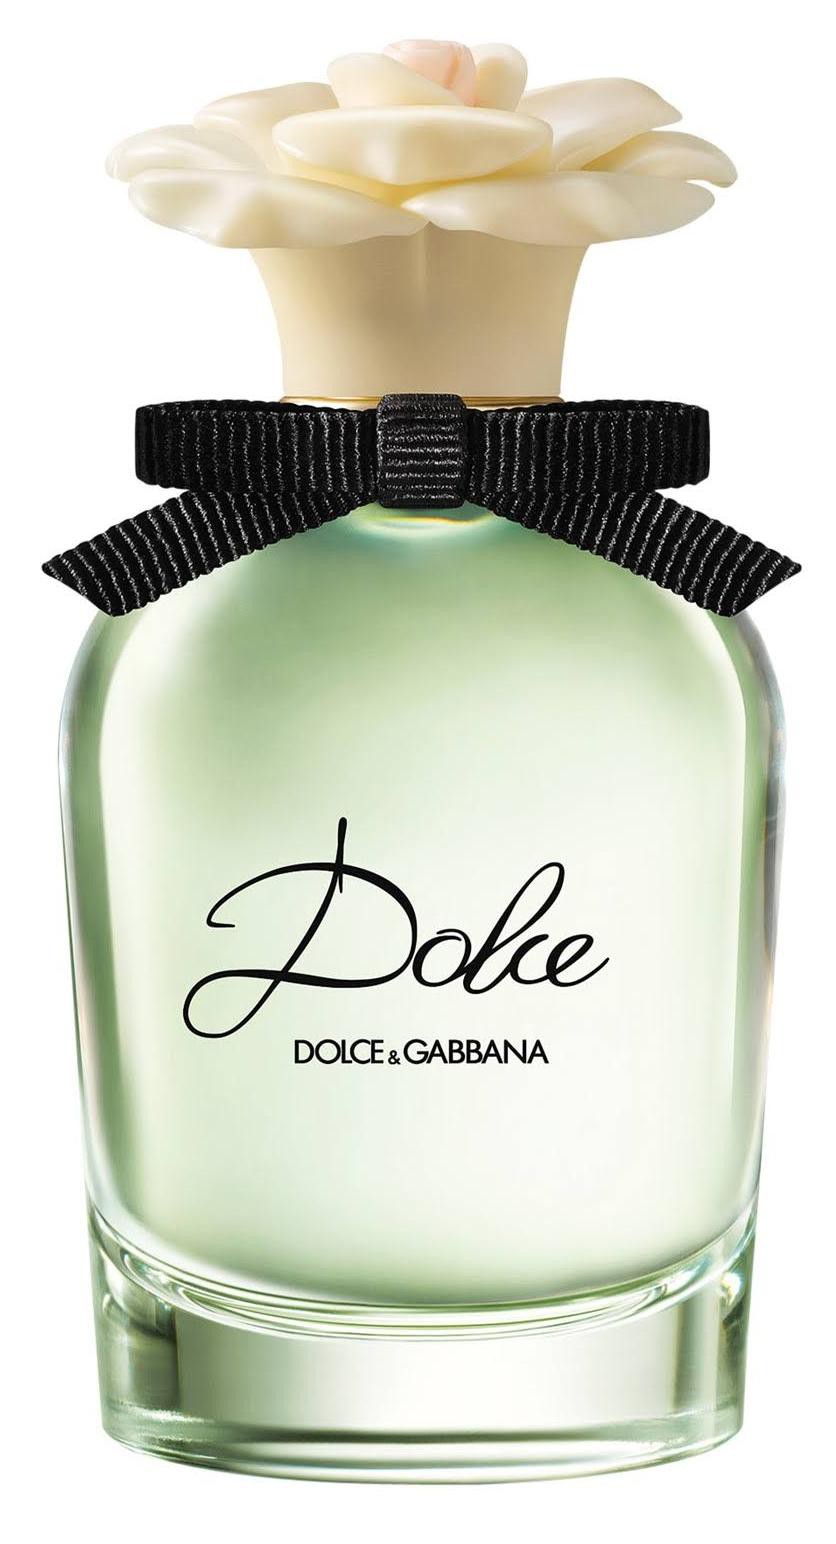 Dolce & Gabbana Dolce Eau De Parfum Spray 50ml